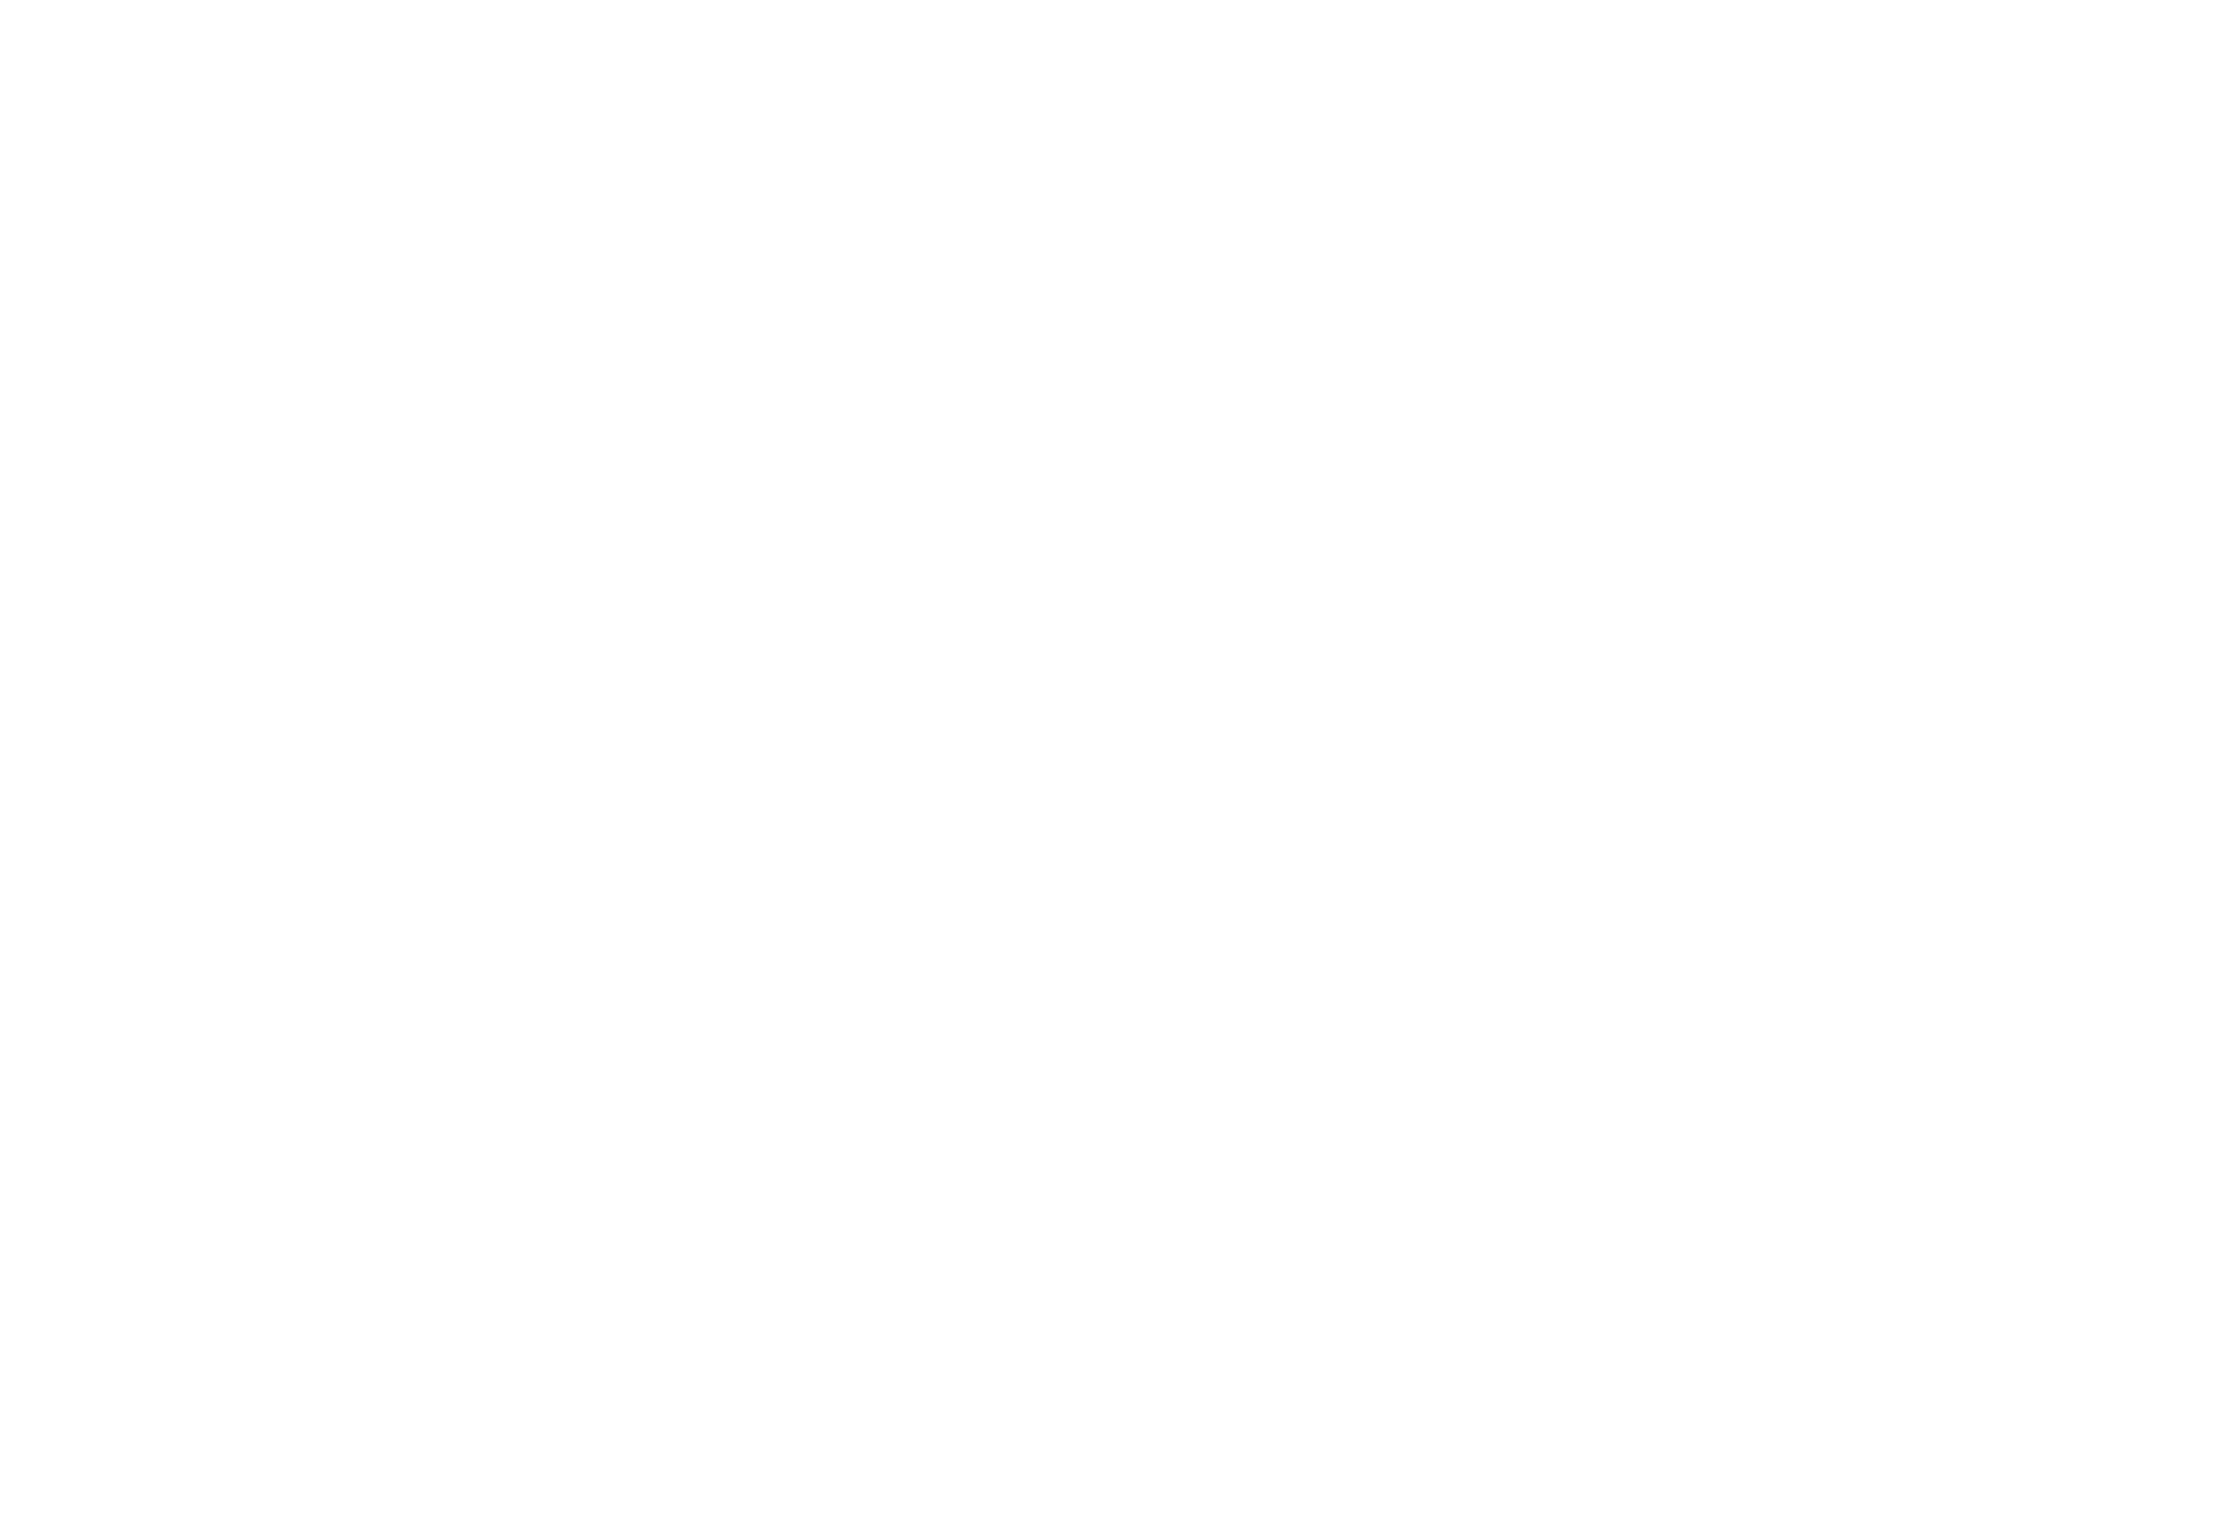 4-year agreement between Daedo and RFEJYDA